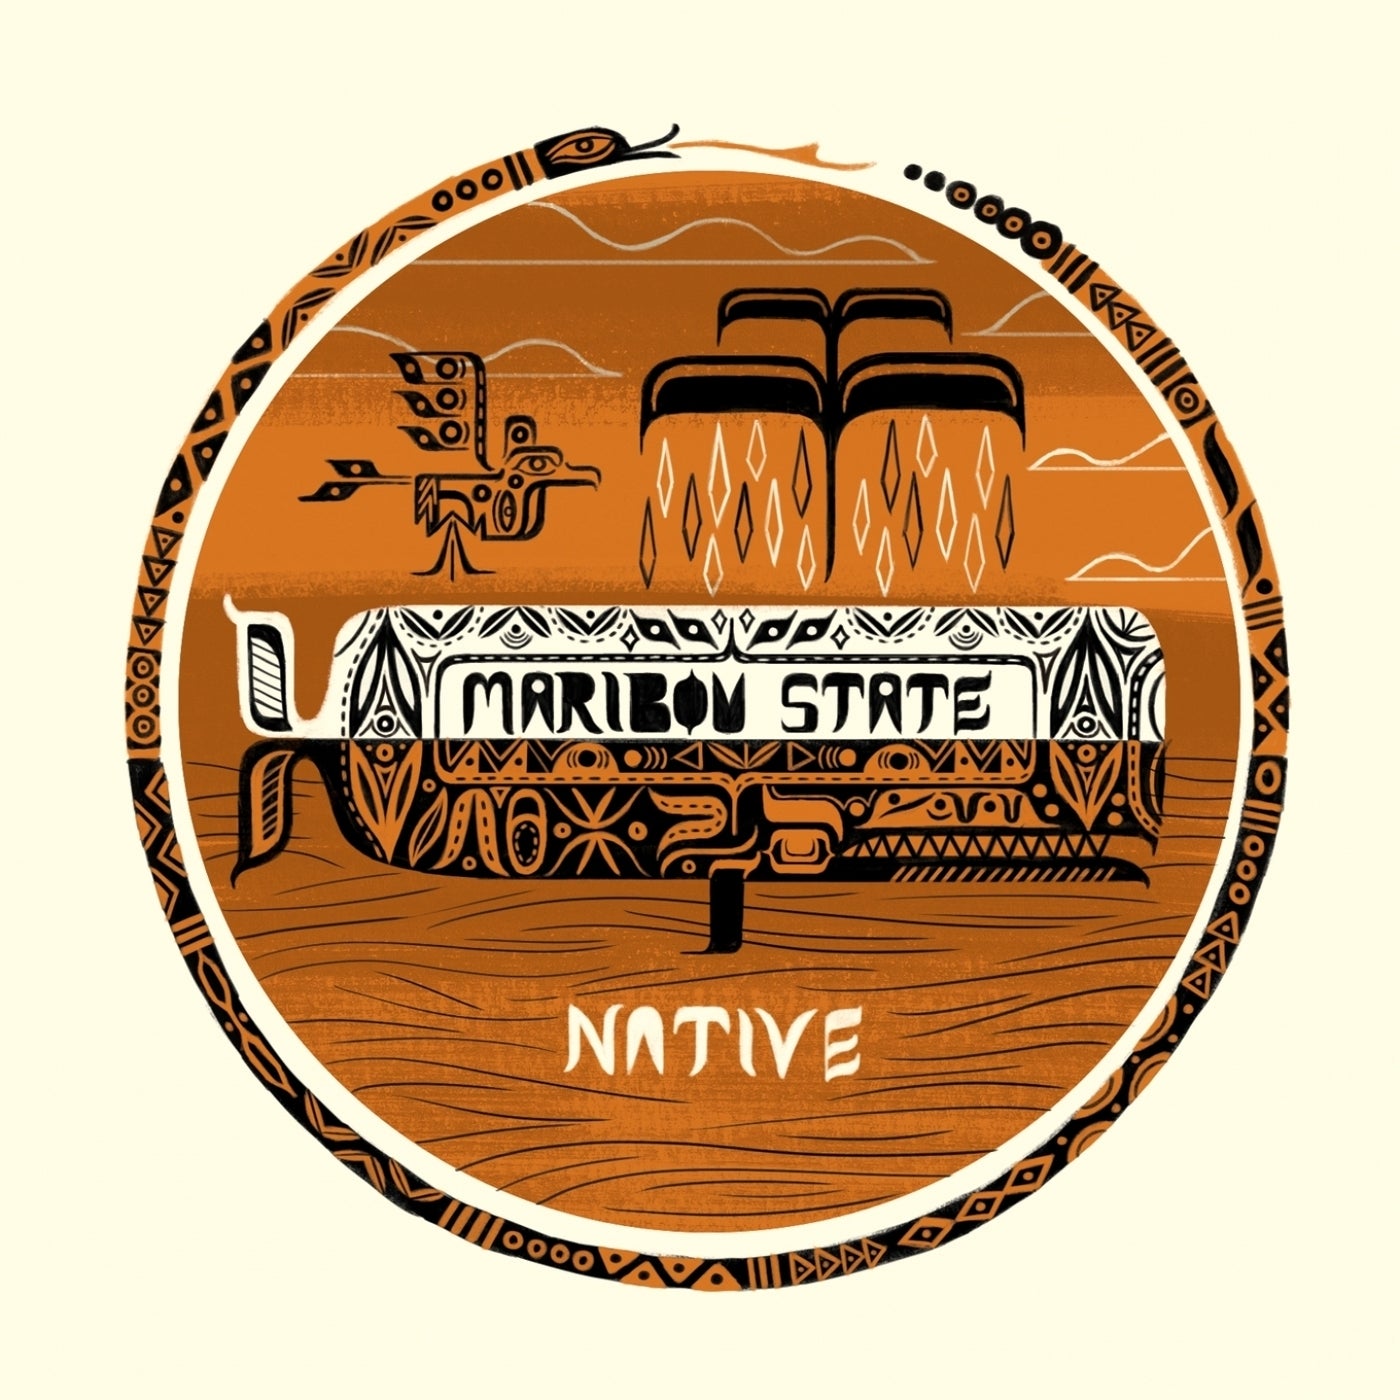 Native EP